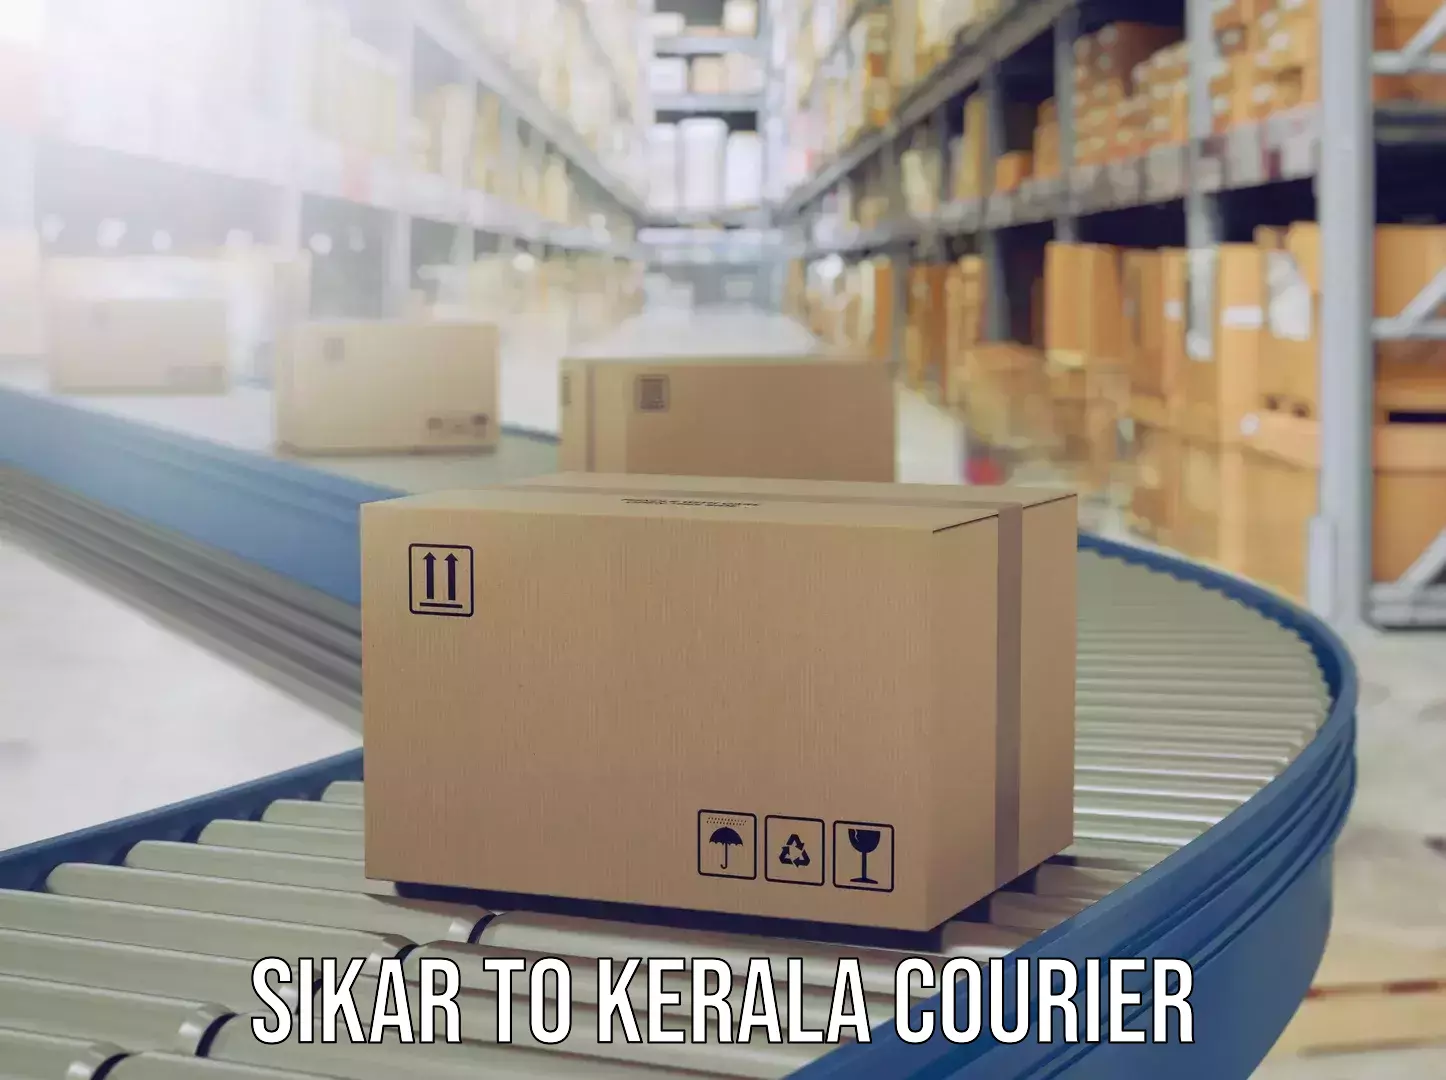 Luggage shipment tracking Sikar to Mahe